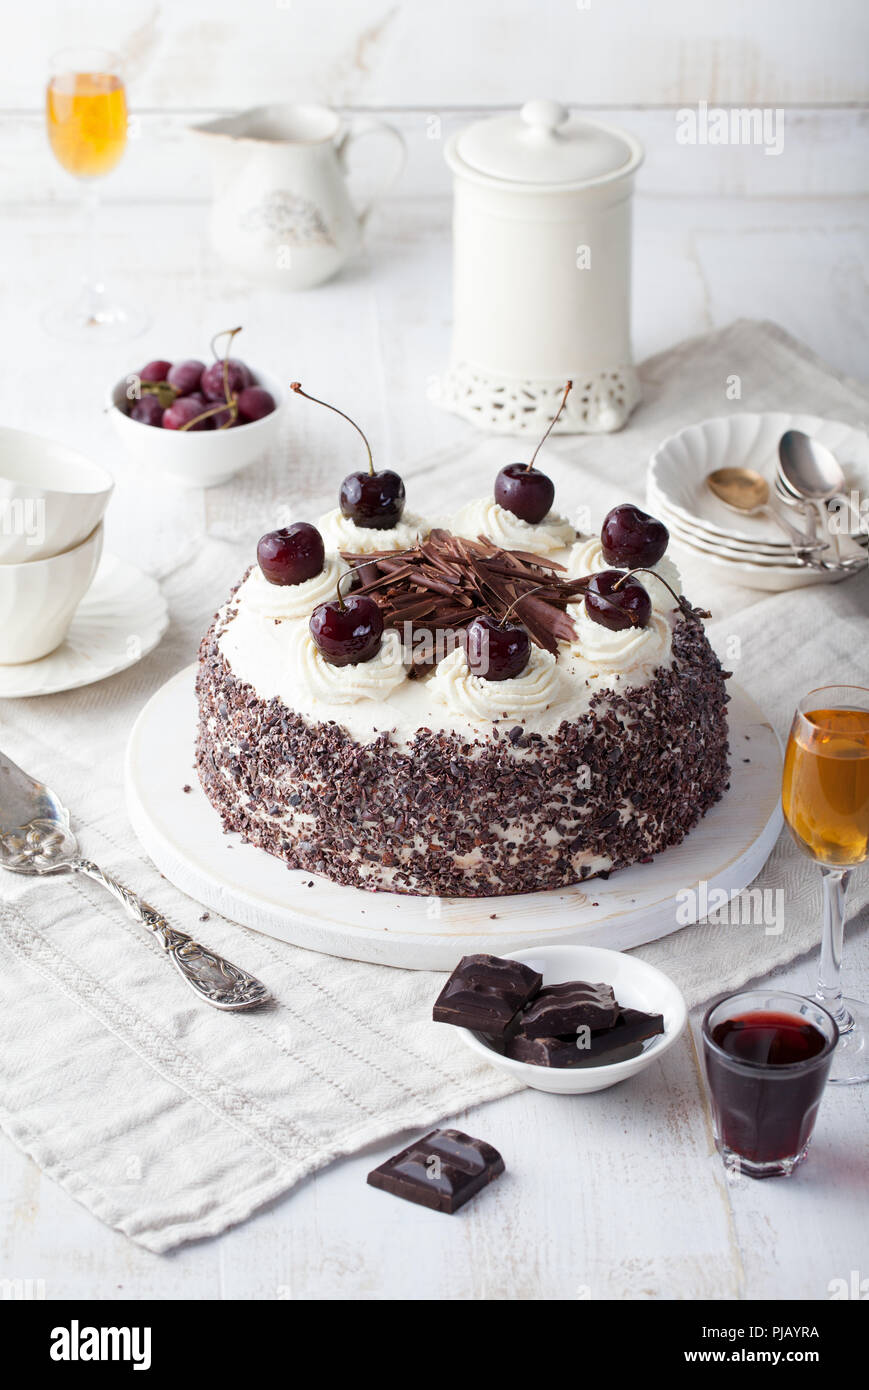 Black forest cake, Schwarzwald pie, dark chocolate and cherry dessert on a white wooden cutting board. Stock Photo